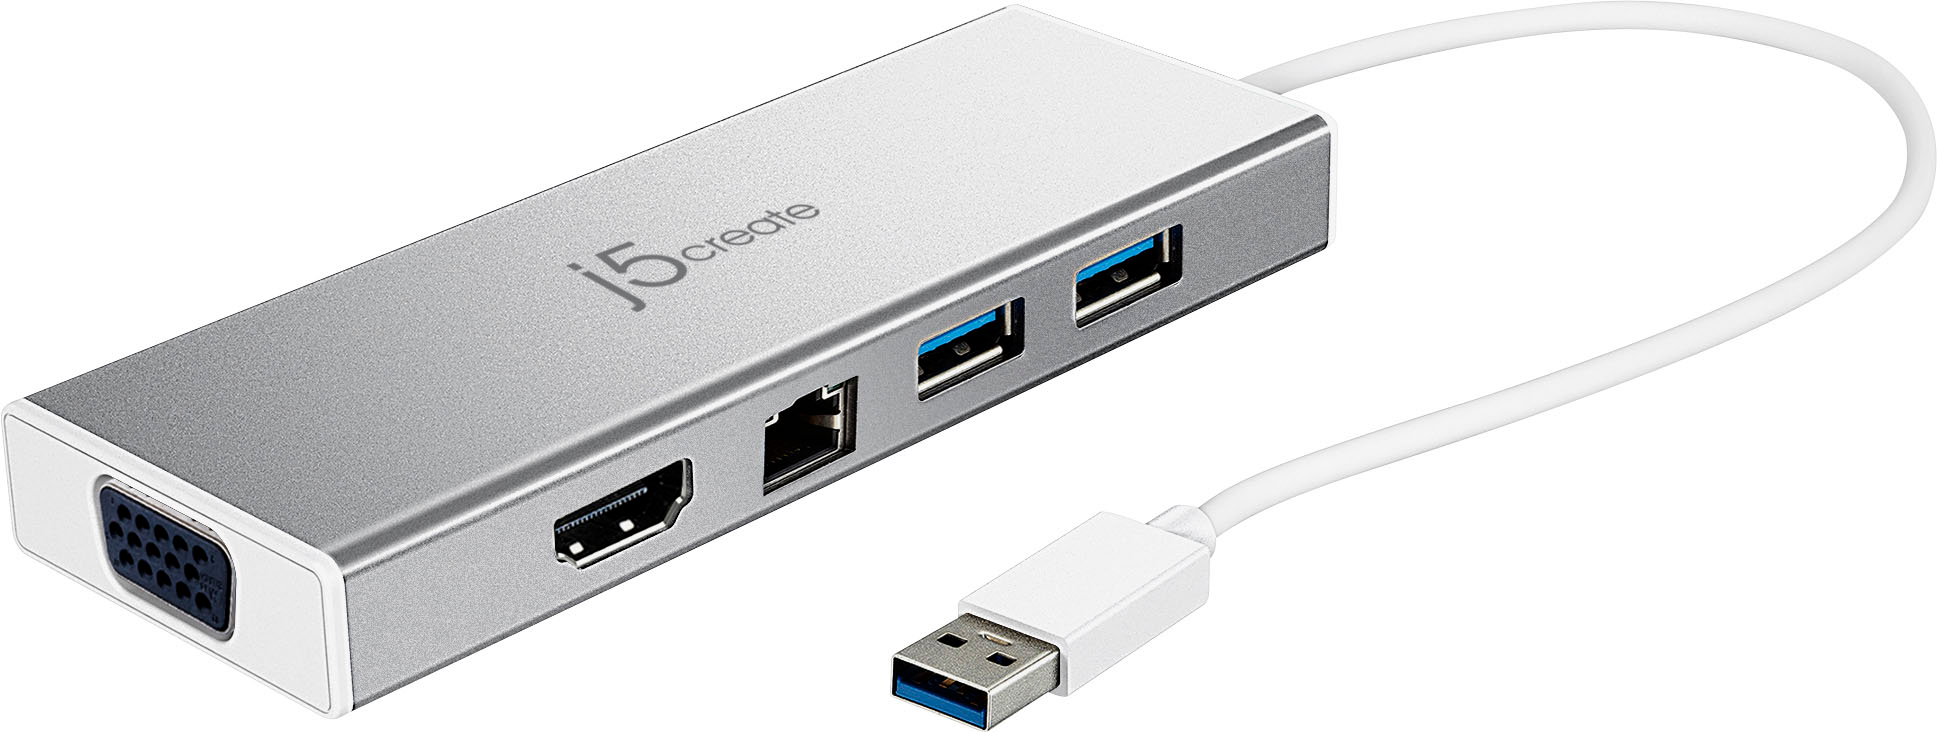 j5create - USB 3.0 Mini Docking Station - Silver